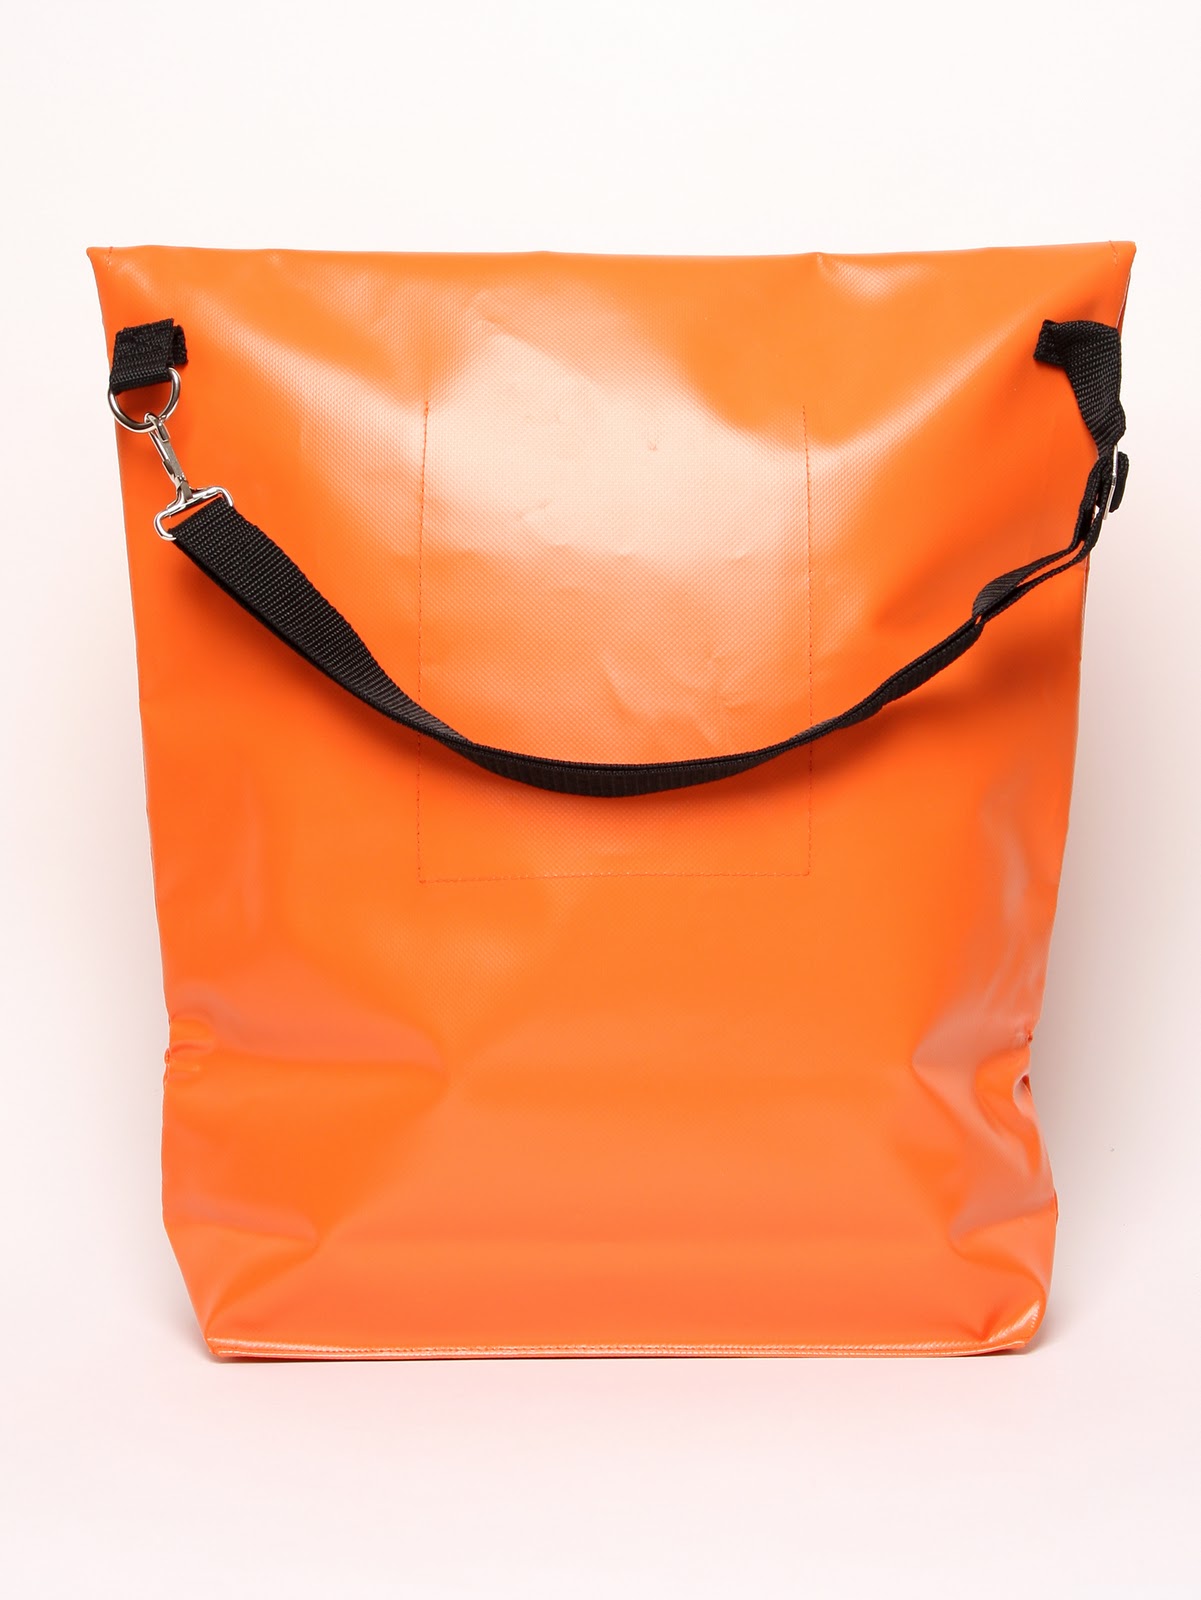 Oki-ni Blog: Comme des Garcons SHIRT PVC Bag